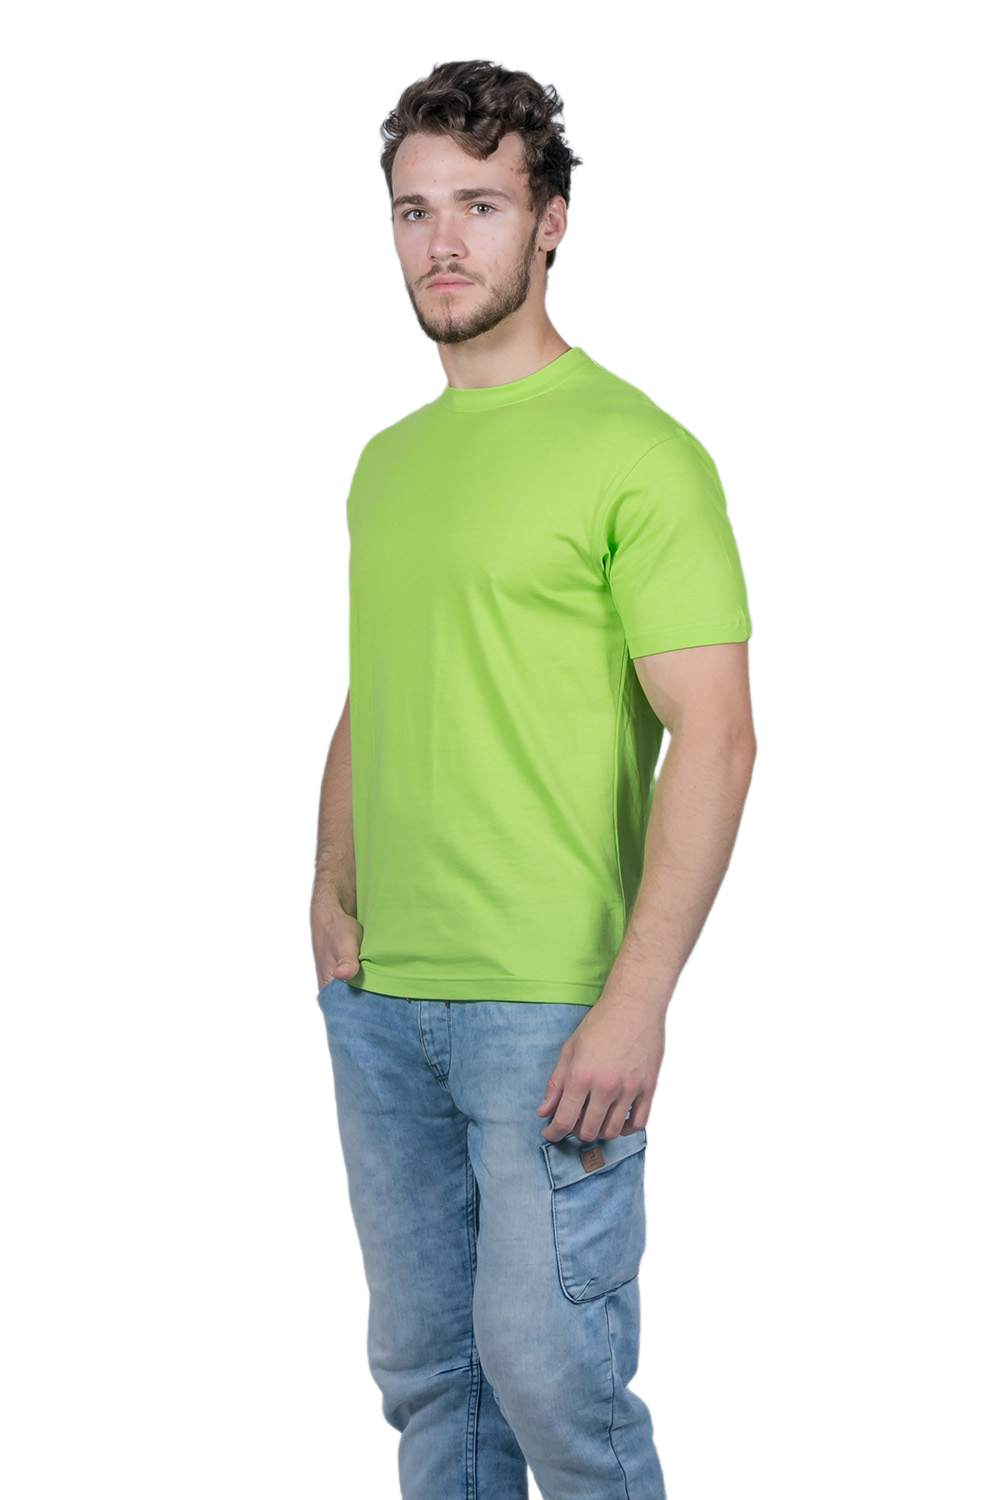 Базовая футболка SWAN - 150 Lux A1, салатовый